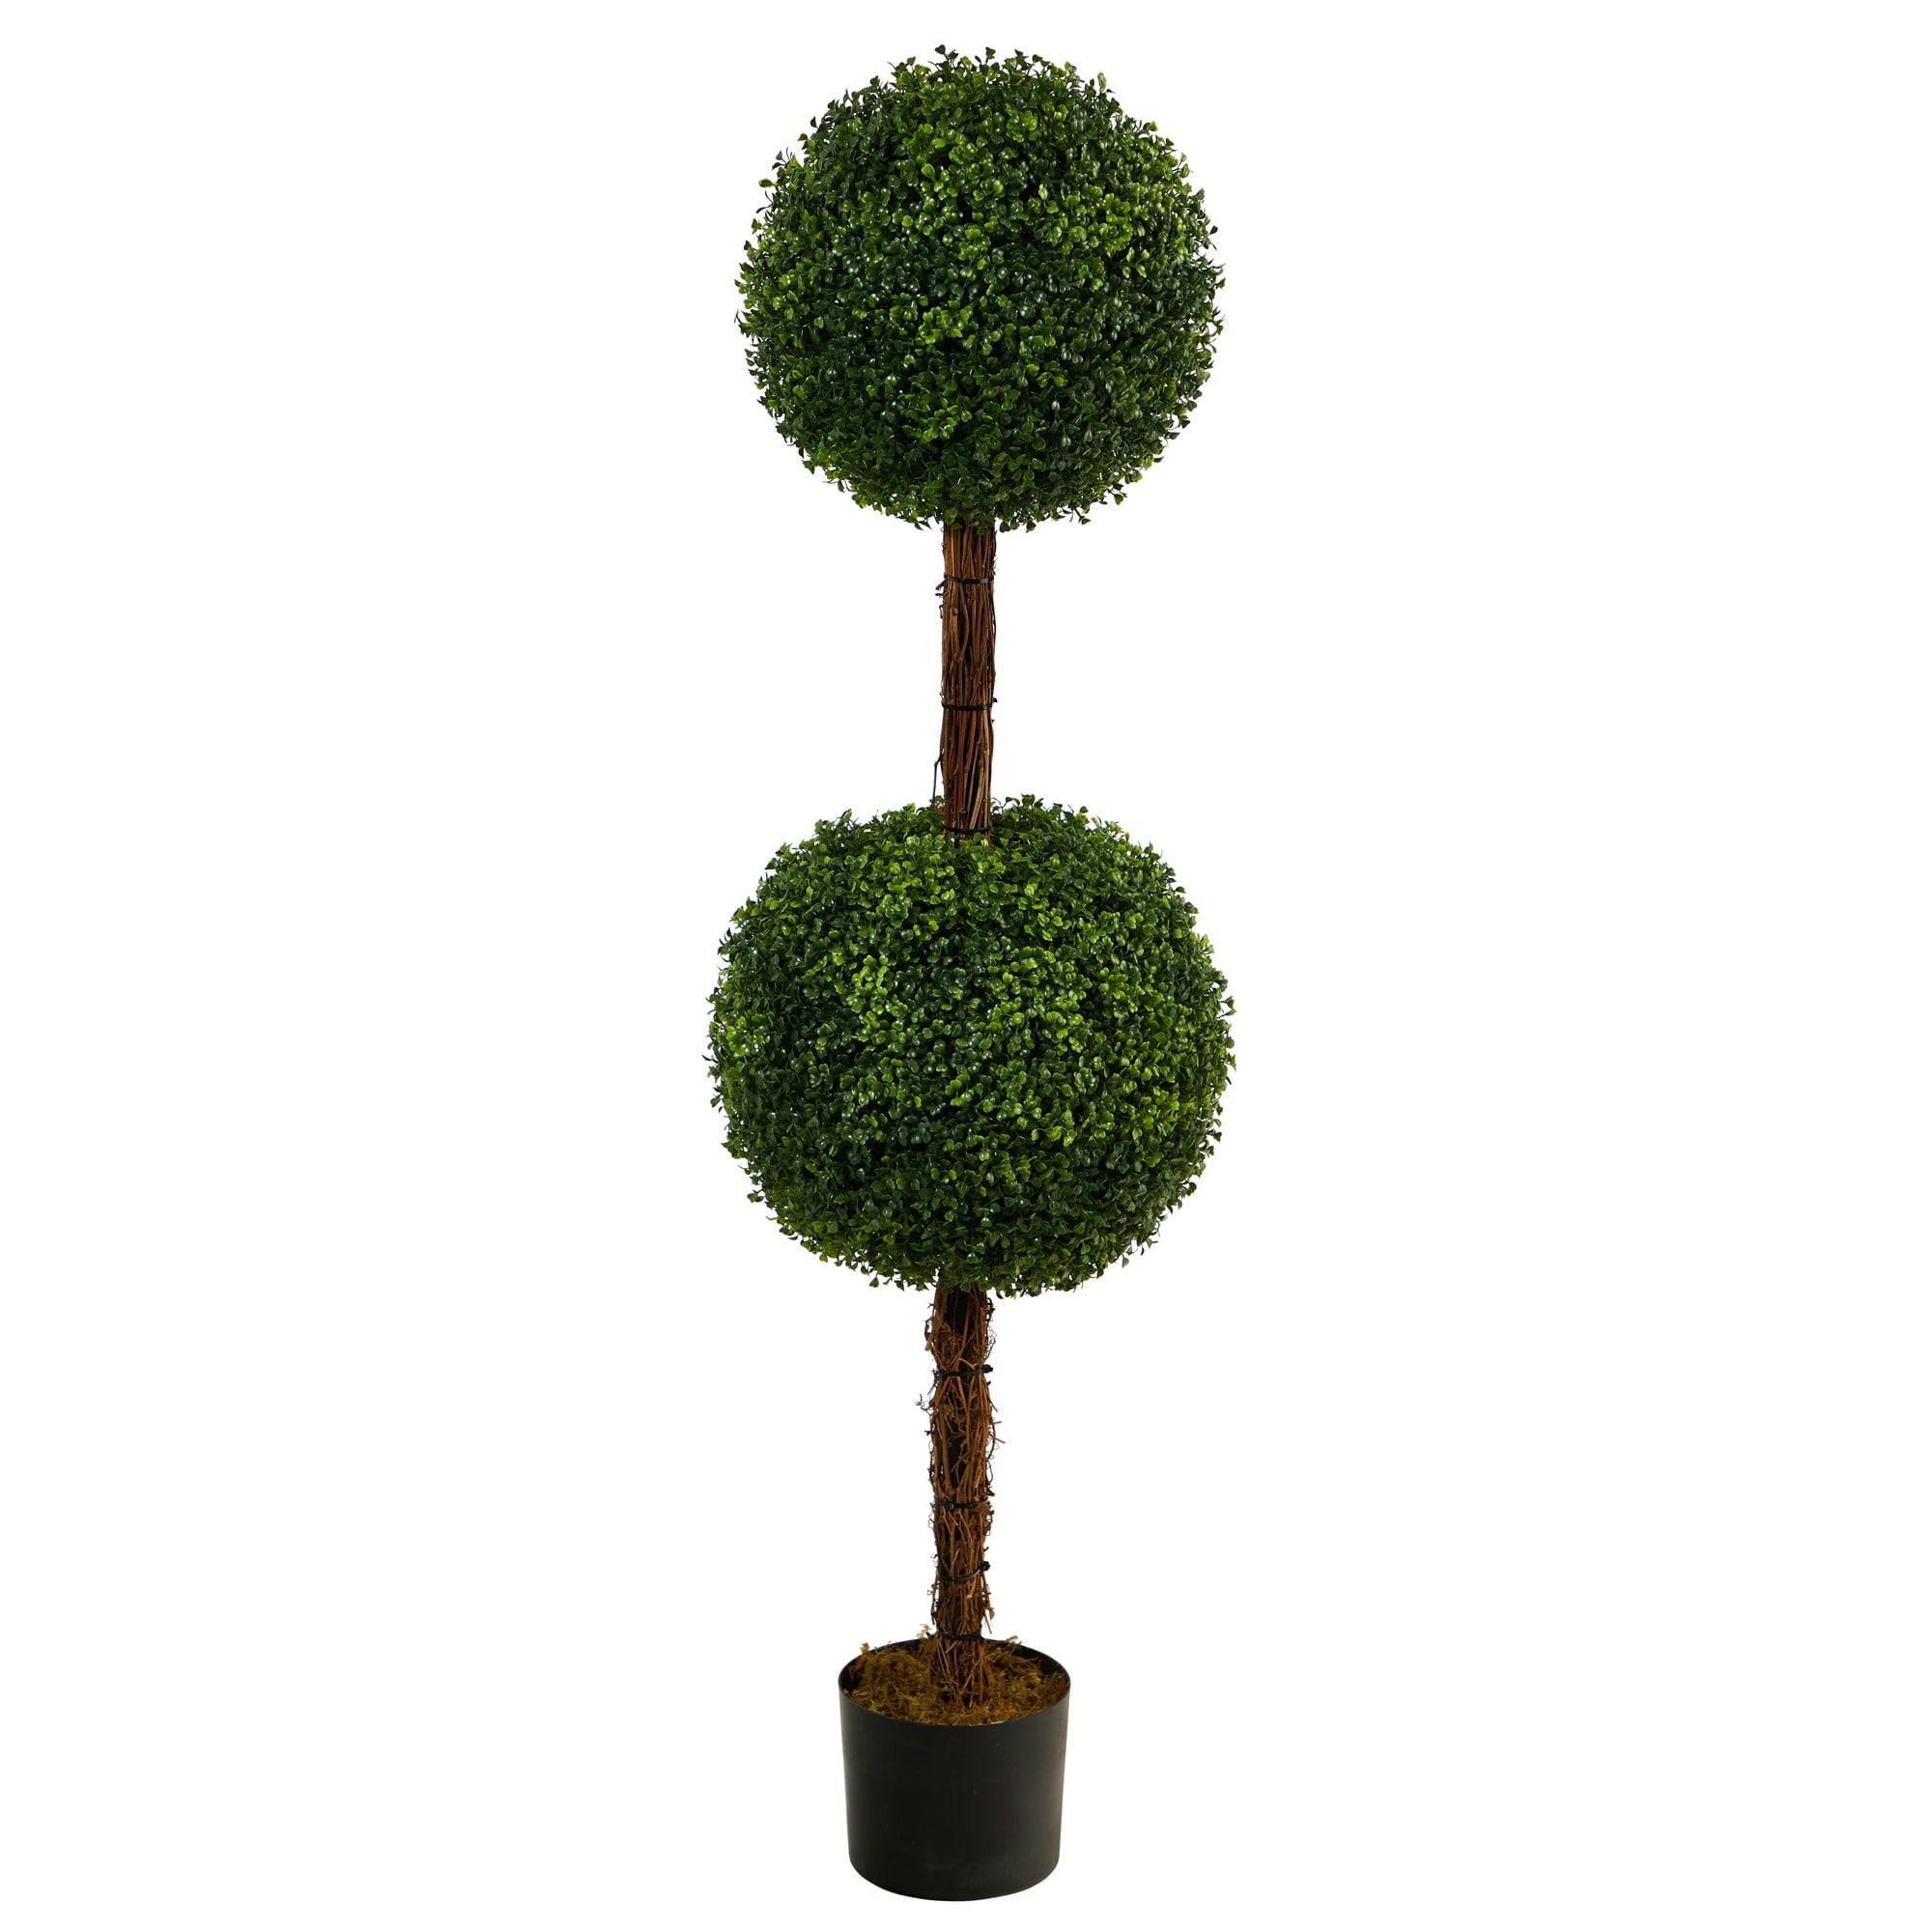 Elegant 54" Double Ball Boxwood Topiary in Black Planter